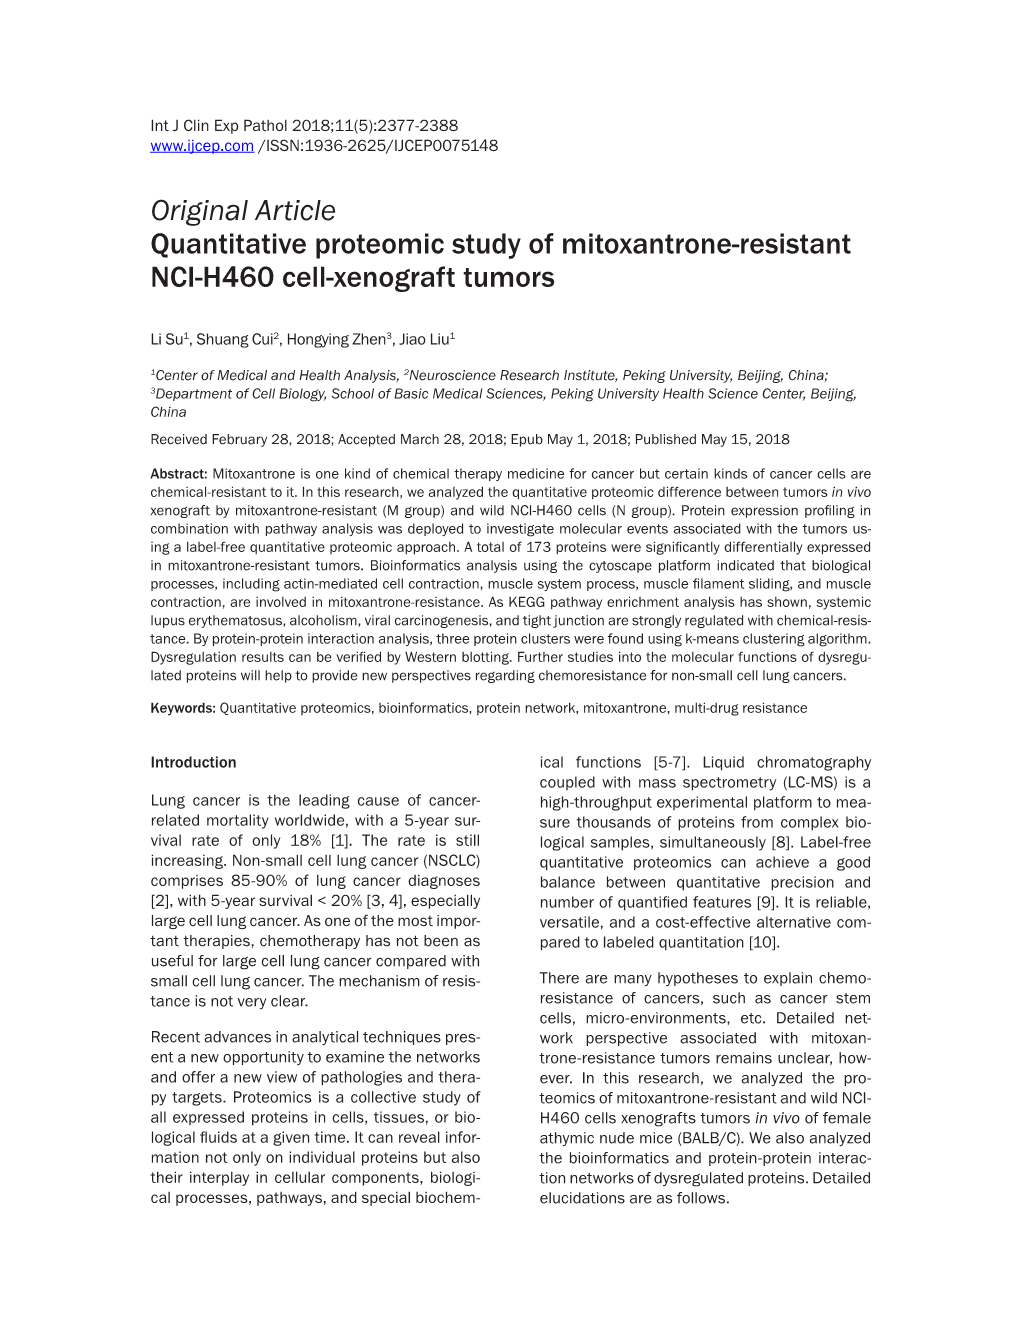 Original Article Quantitative Proteomic Study of Mitoxantrone-Resistant NCI-H460 Cell-Xenograft Tumors